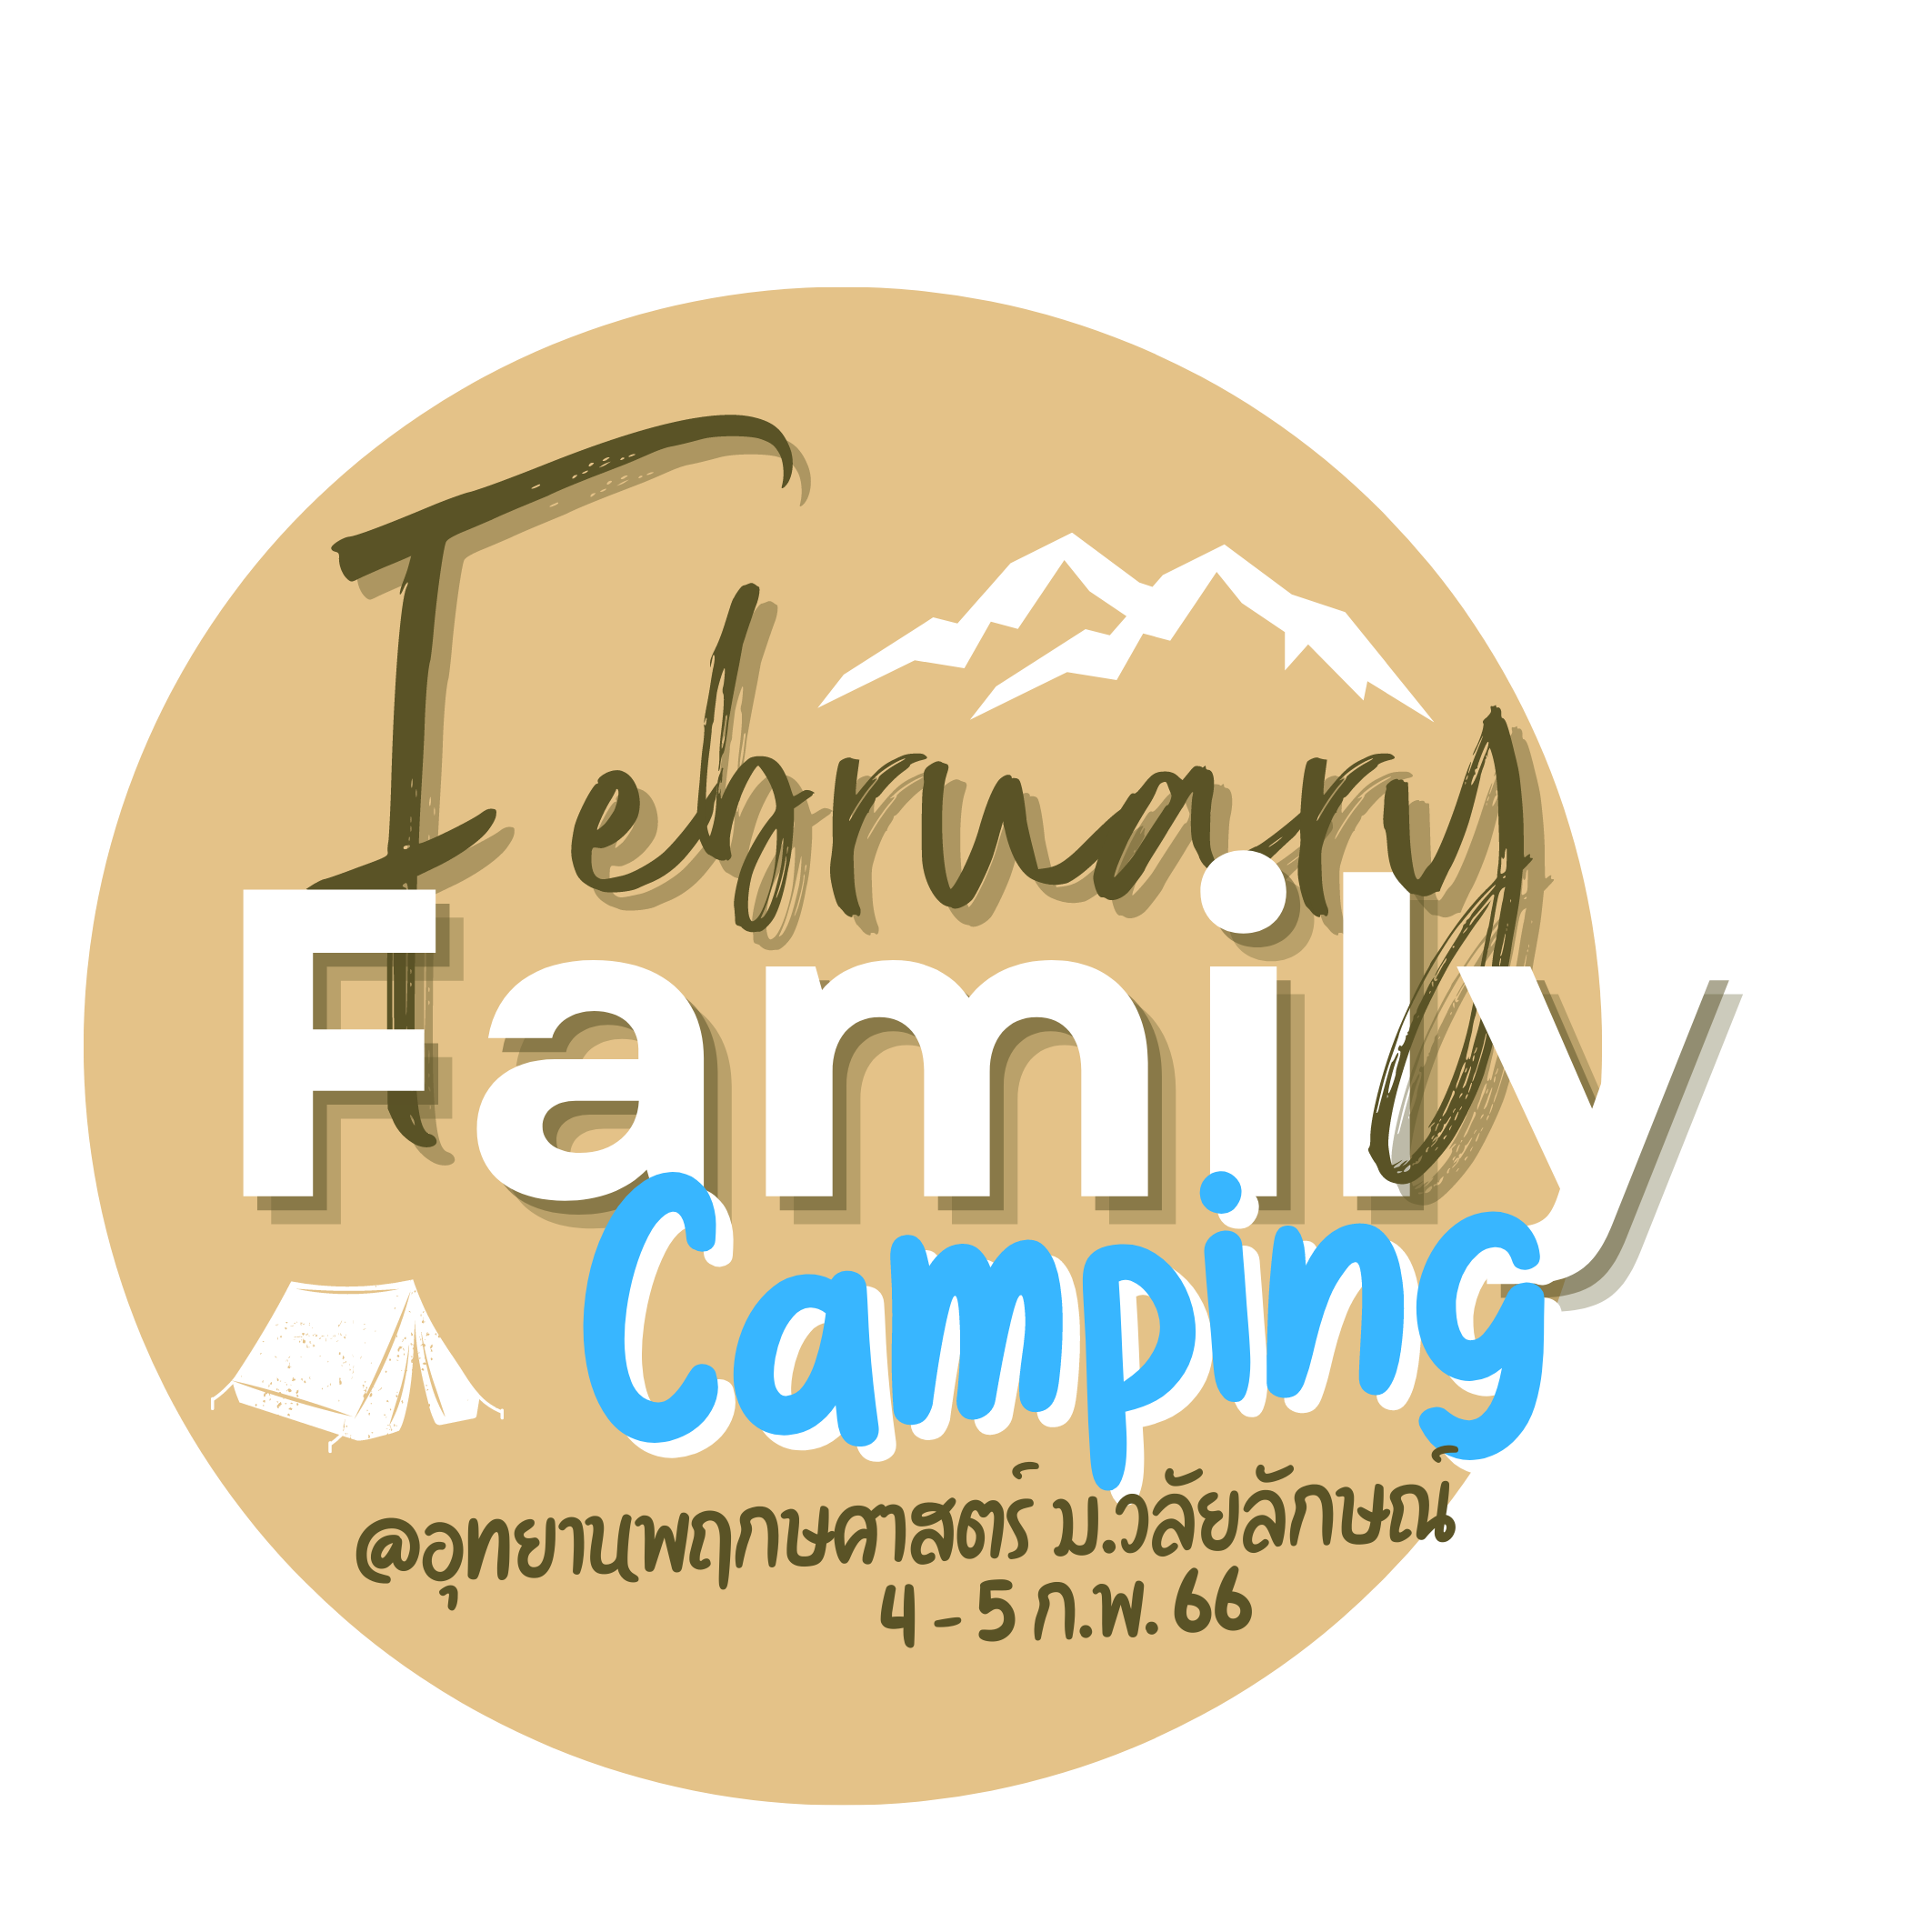 February Family Camping